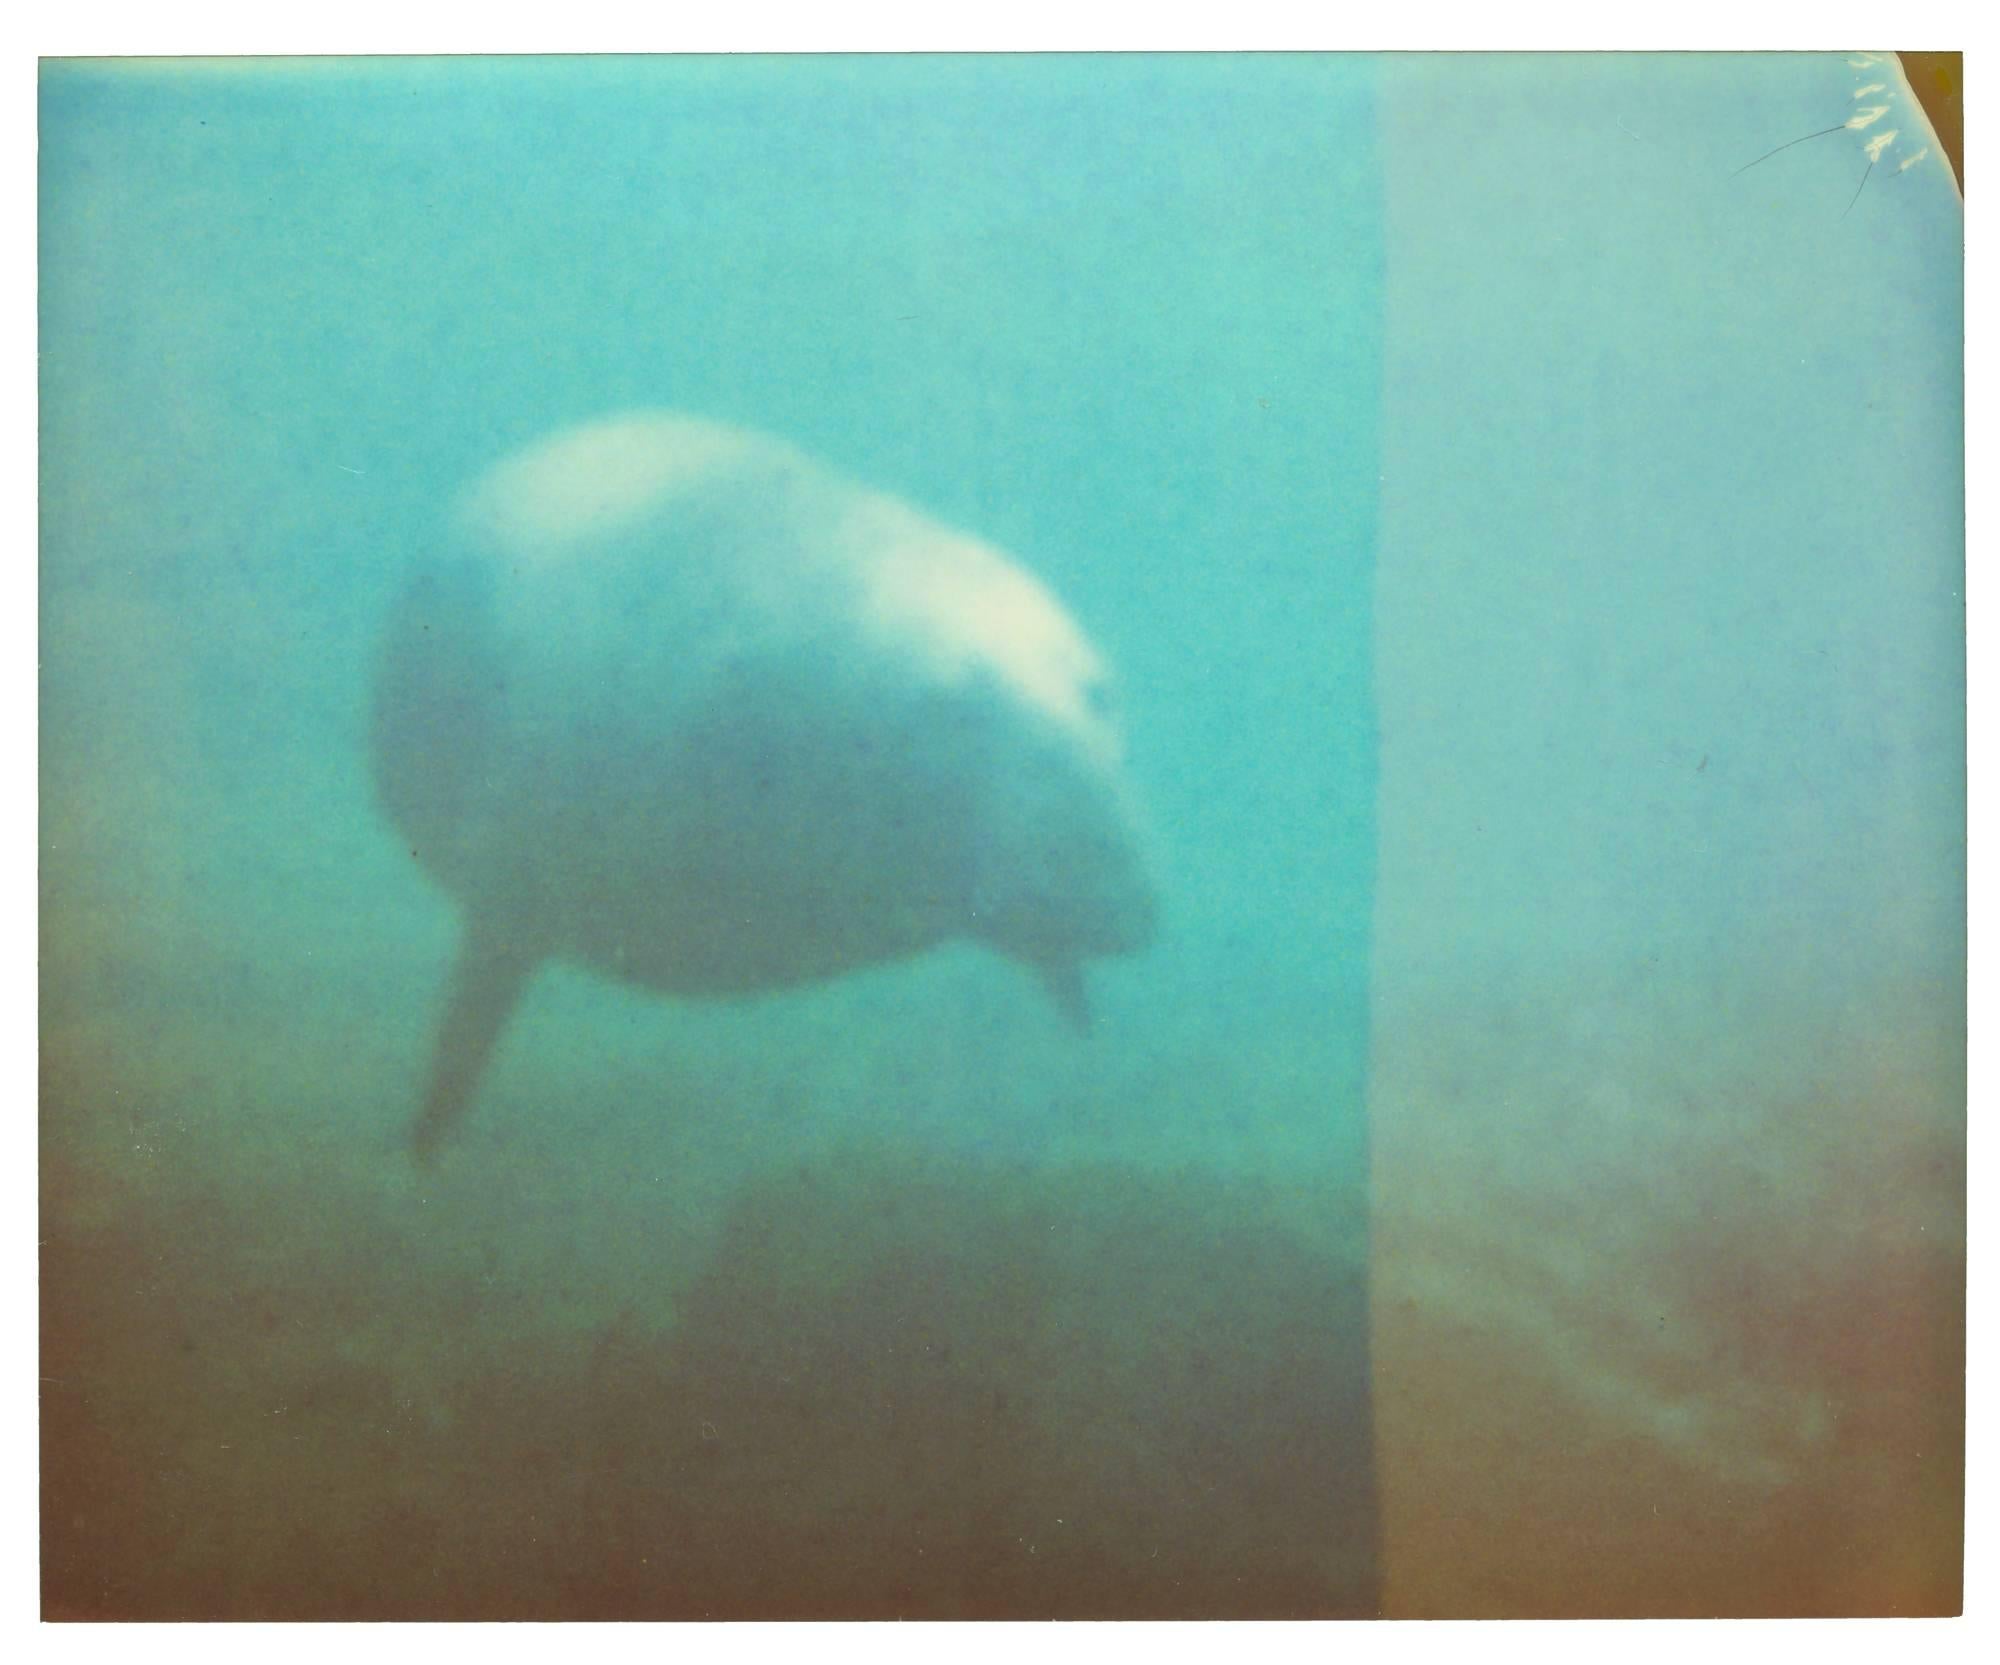 Dugong - Stay, Zeitgenössisch, Abstrakt, Landschaft, USA, Polaroid, Fotografie